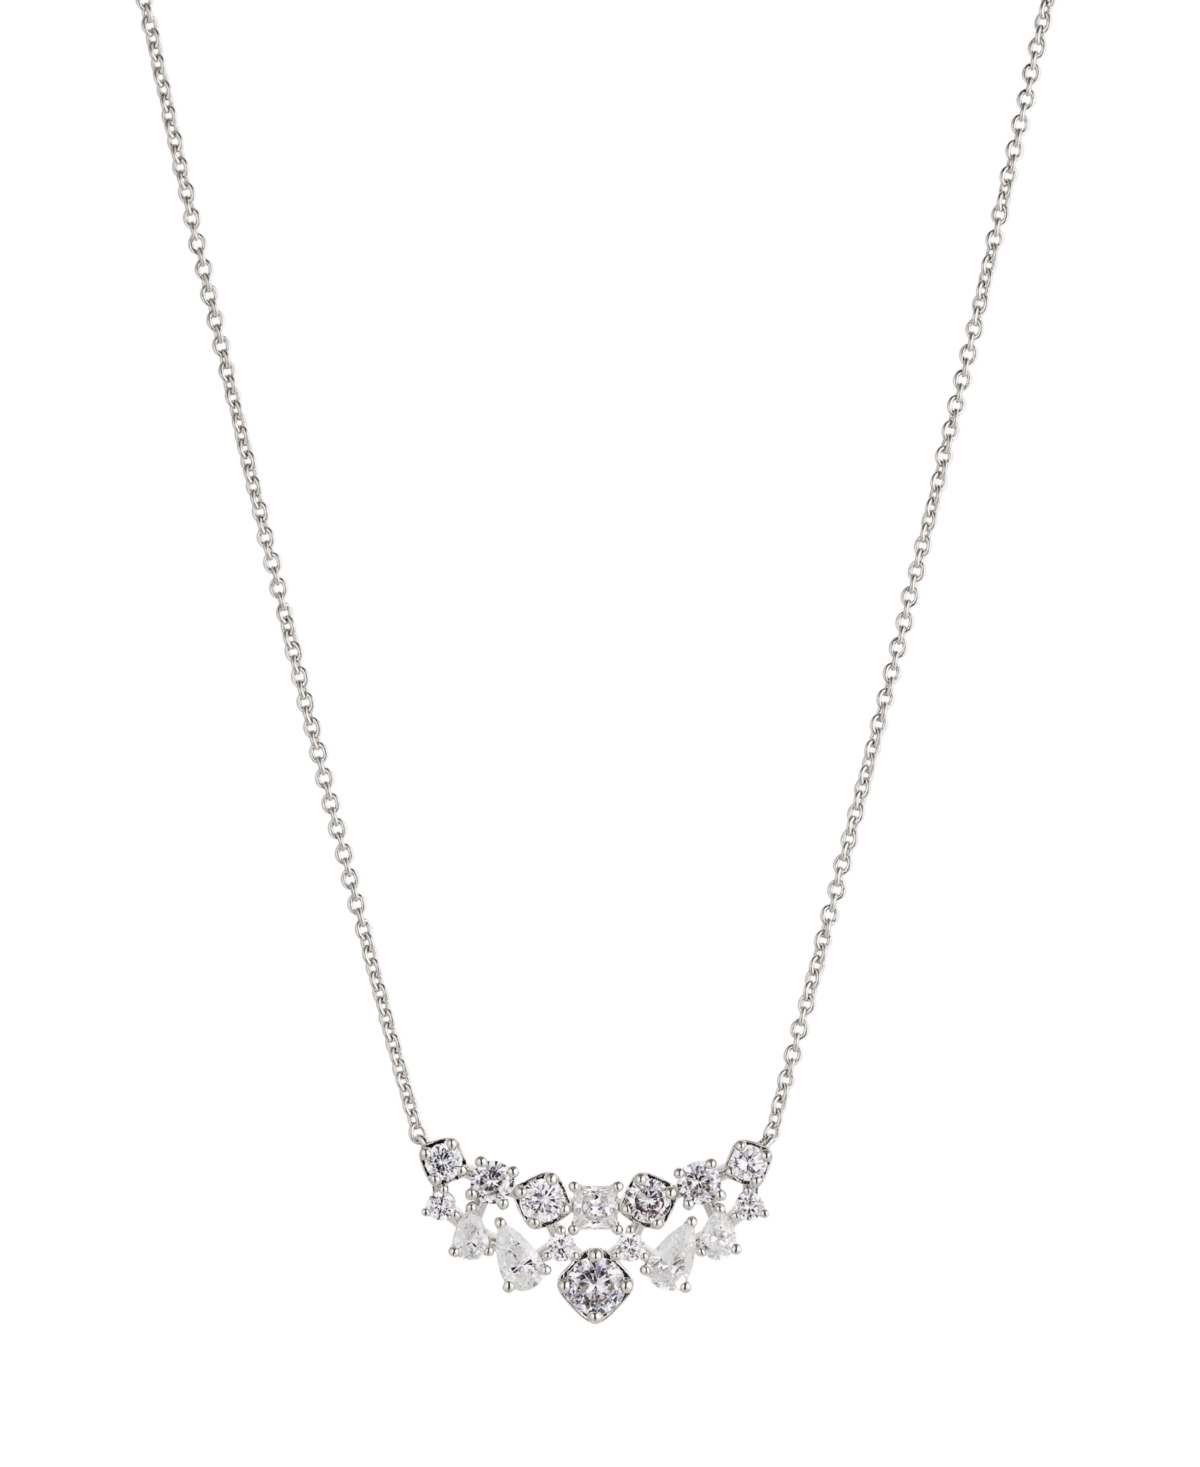 Eliot Danori Cluster Frontal Necklace in Silver-Tone